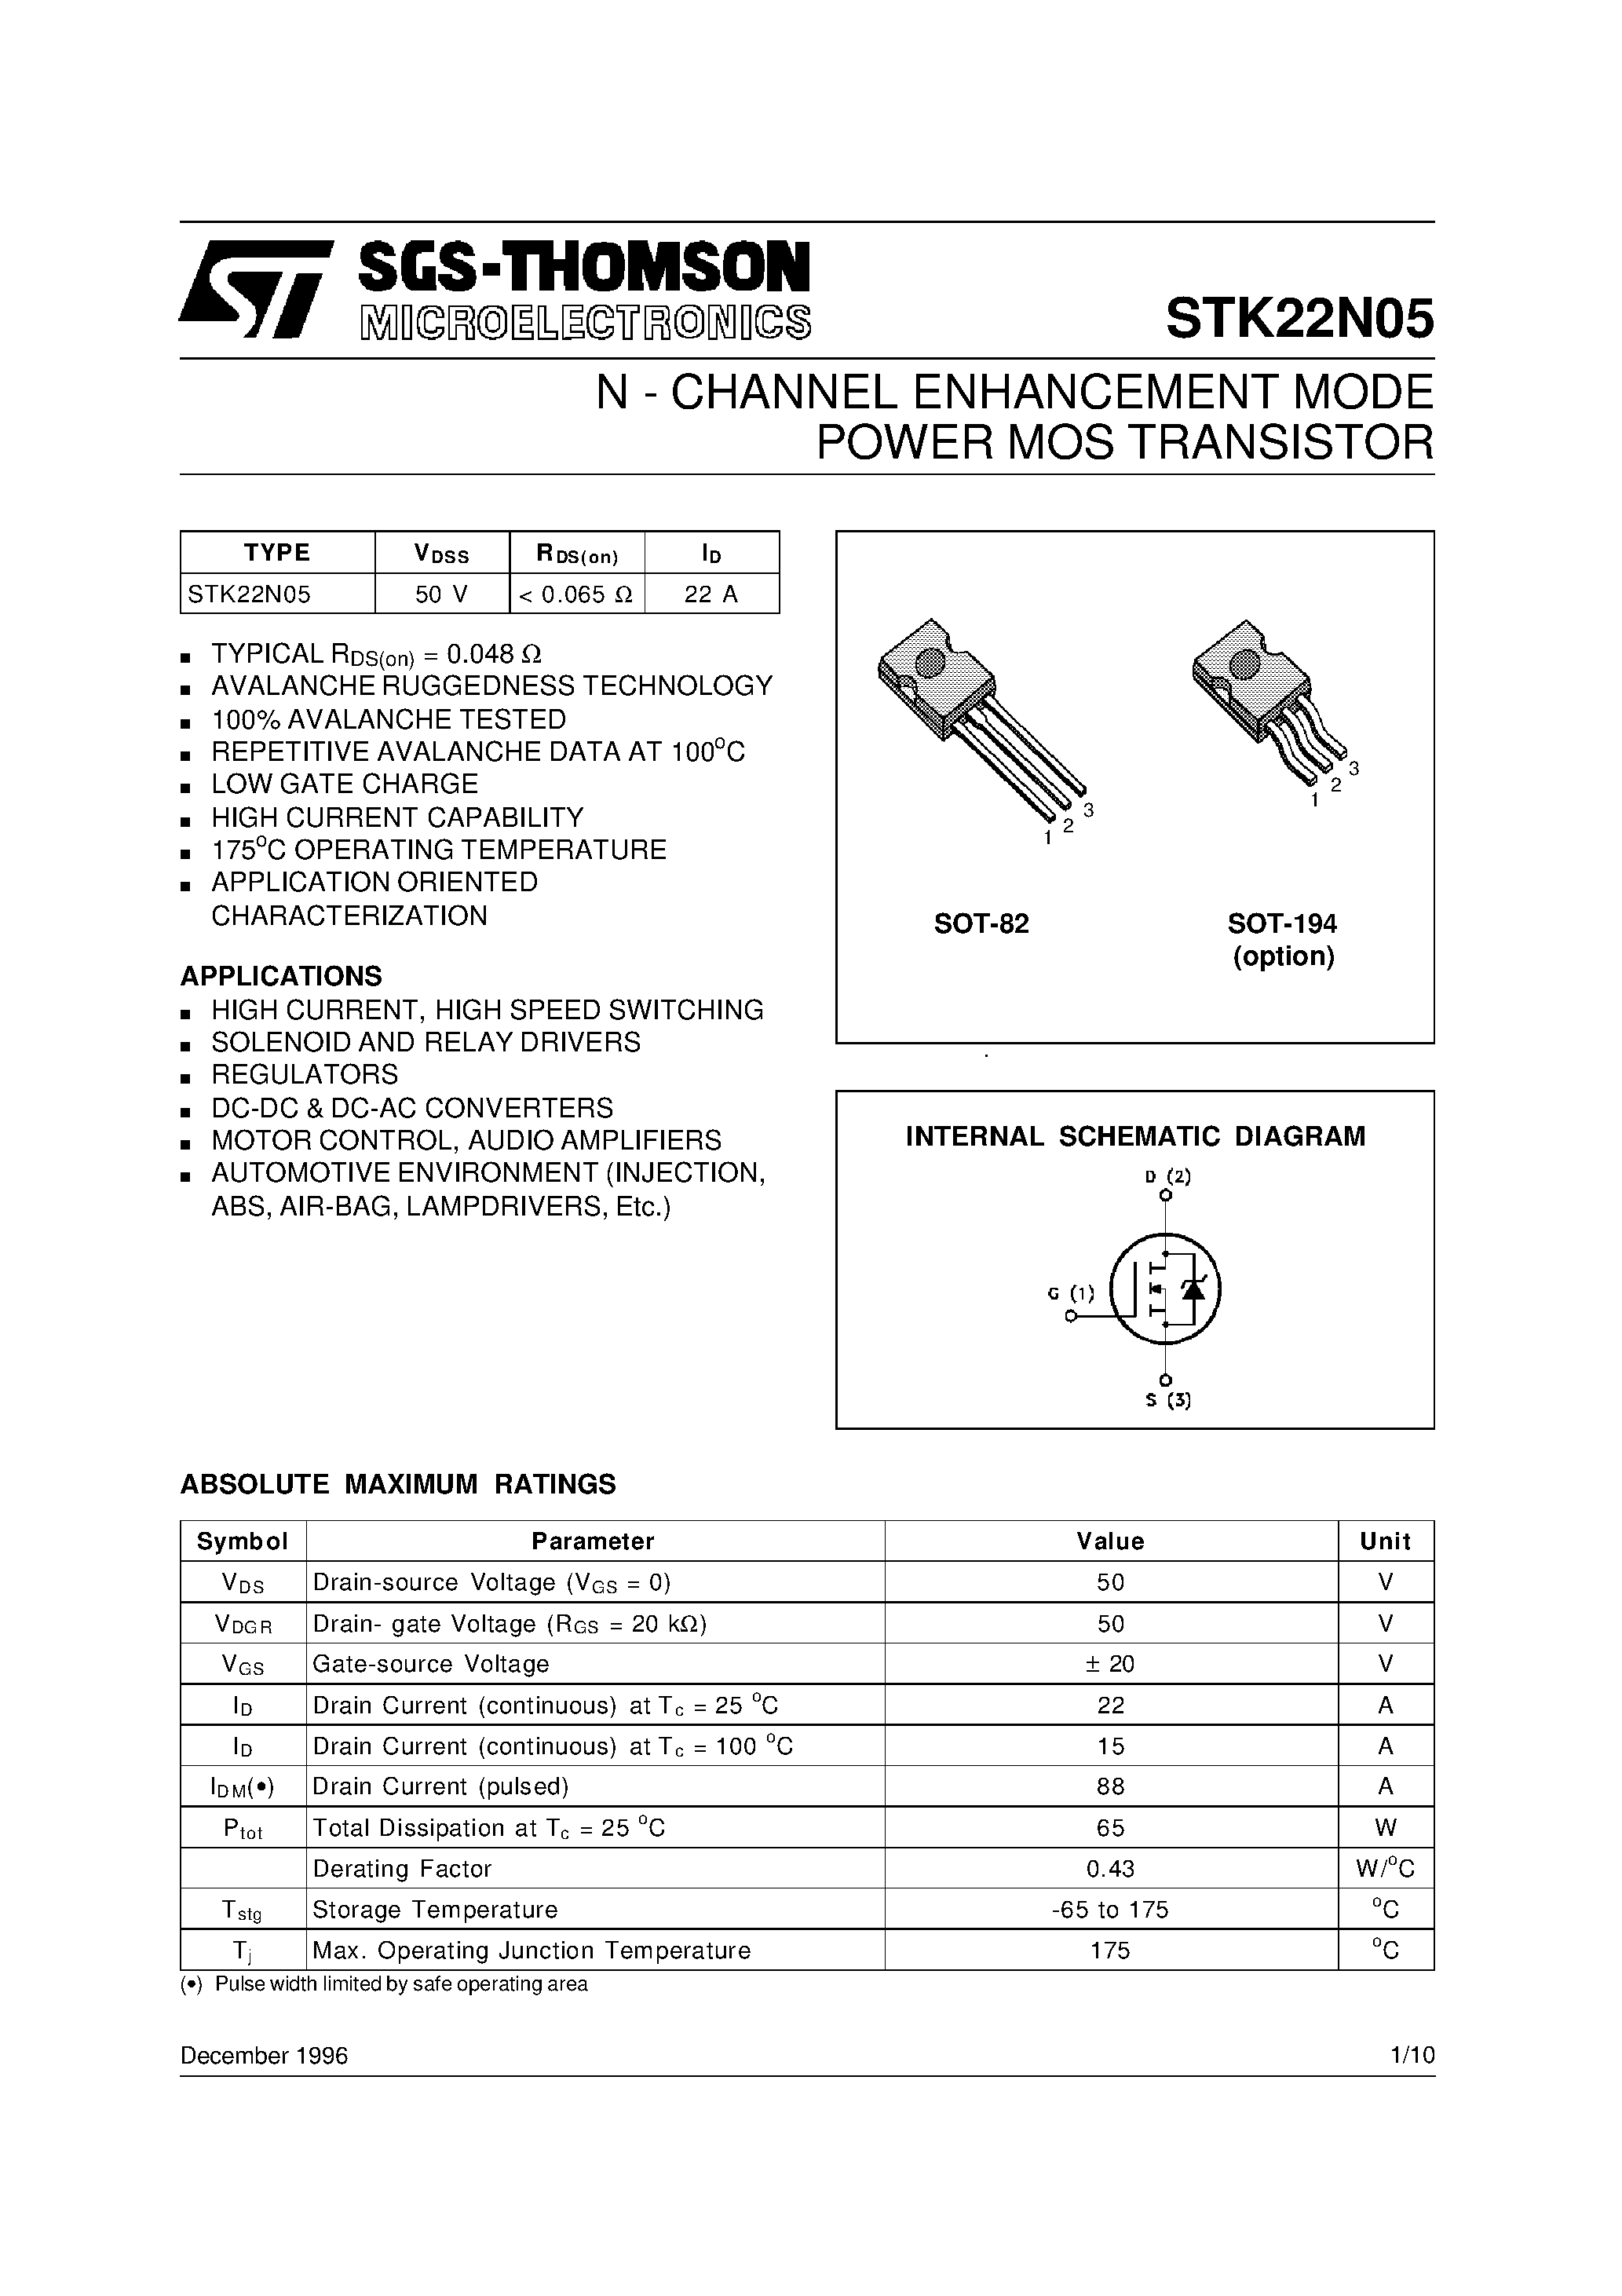 Datasheet STK22N05 - N - CHANNEL ENHANCEMENT MODE POWER MOS TRANSISTOR page 1